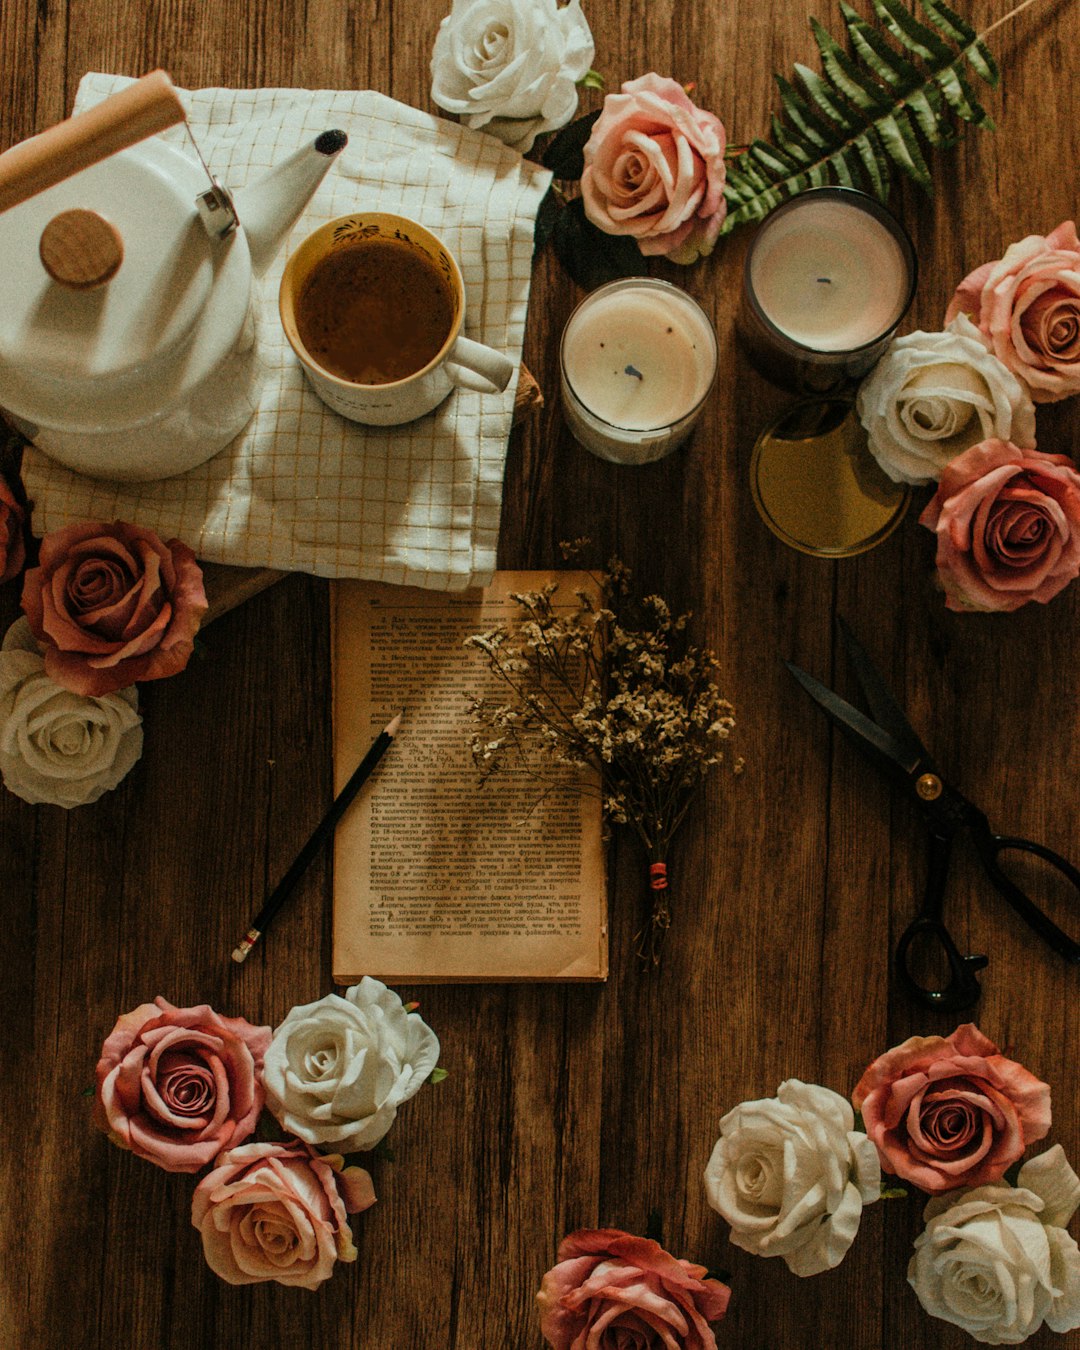 pink and white roses near white ceramic mug on table